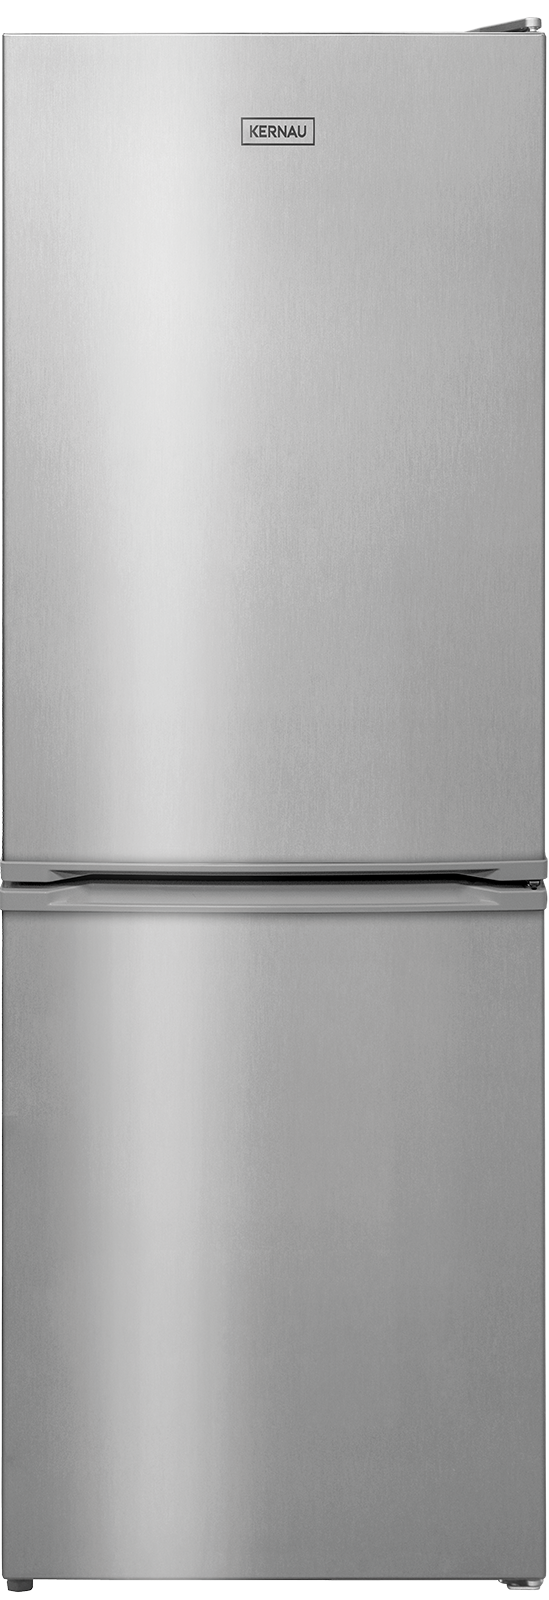 Двухкамерный холодильник KERNAU KFRC 17153 IX